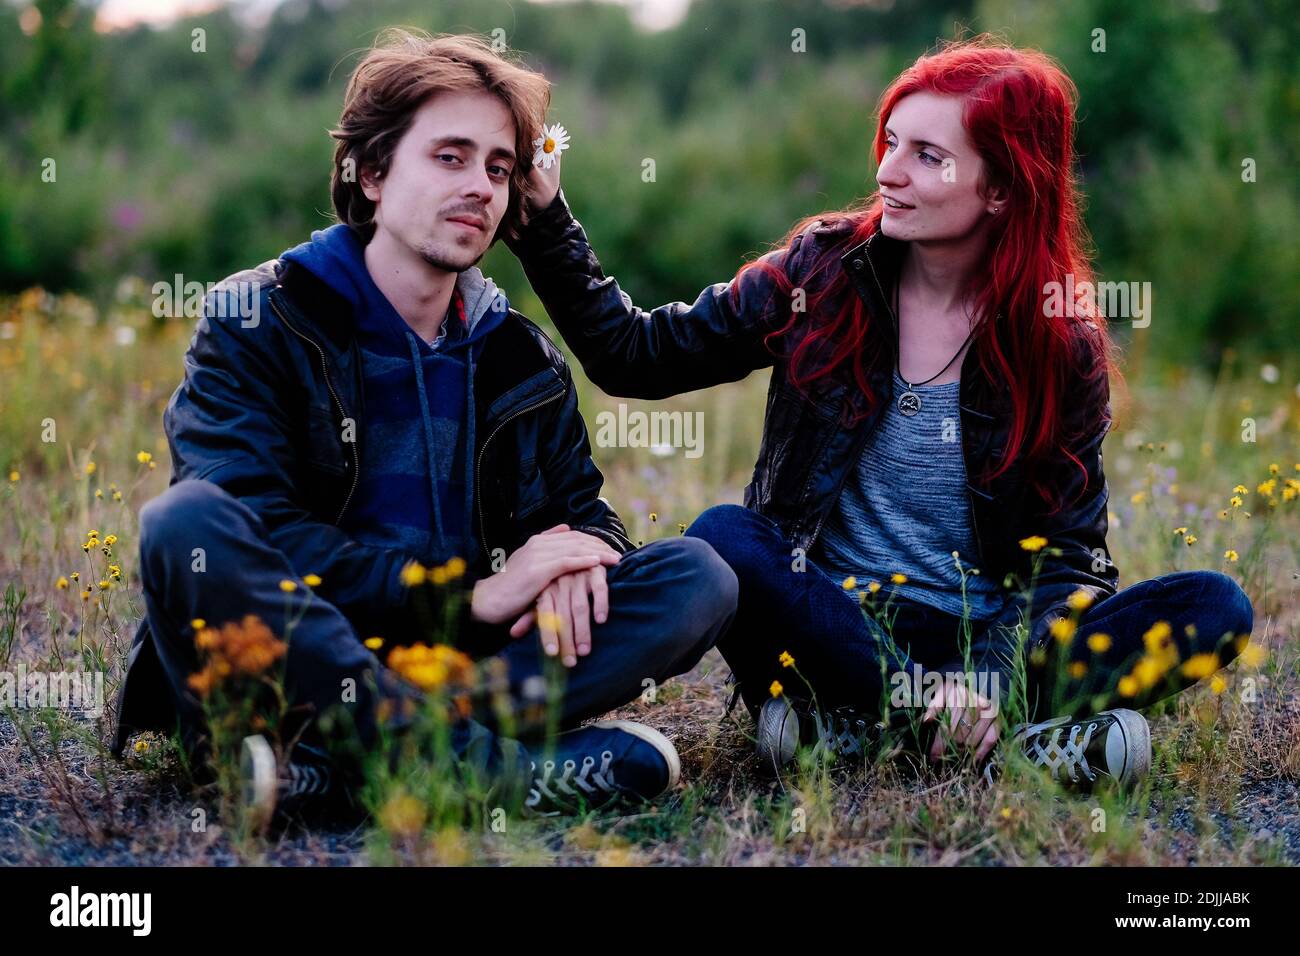 Redhead Girlfriend Putting Flower In Boyfriend Hair While Sitting On Field  Stock Photo - Alamy